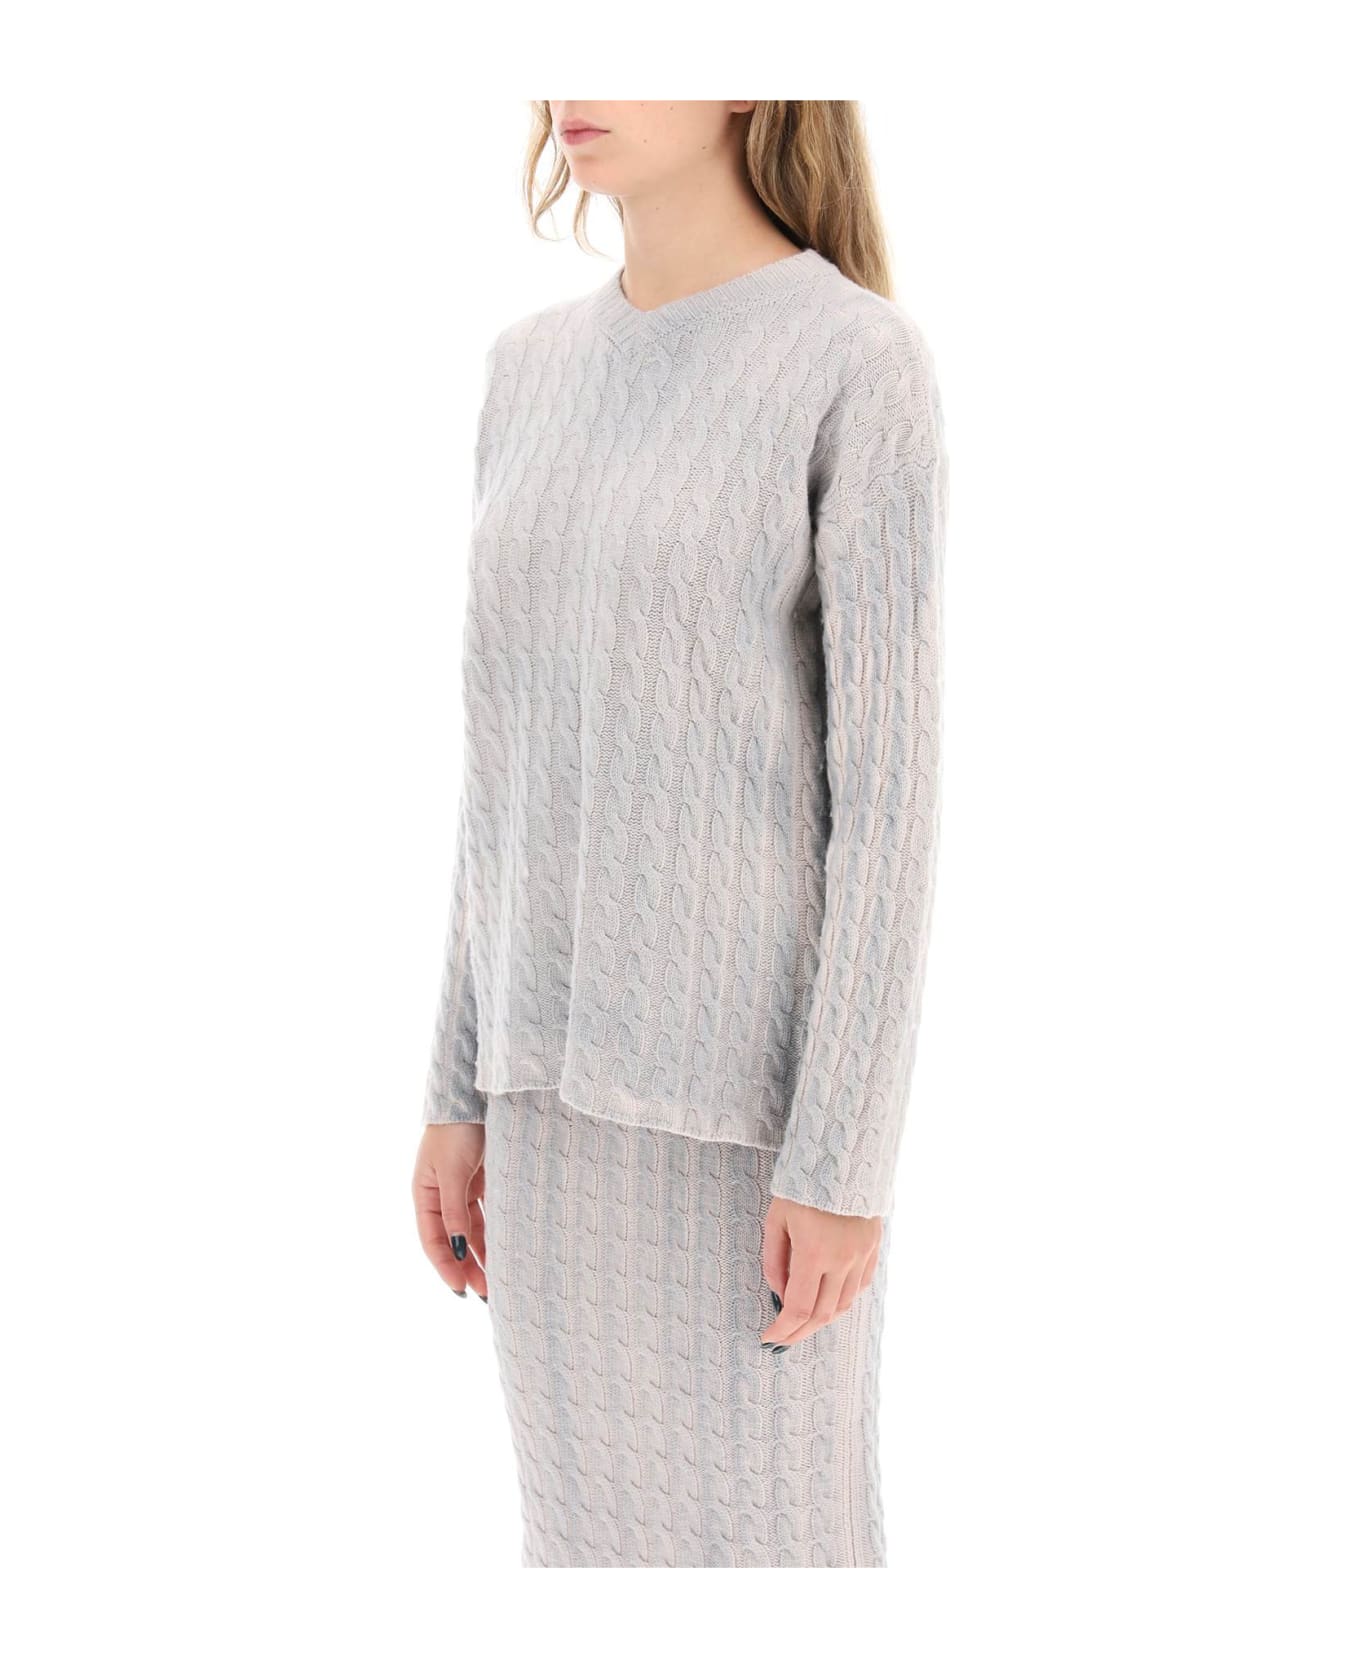 Paloma Wool Ainhoa Cable Knit Sweater - GRIS MEDIO (Grey) ニットウェア